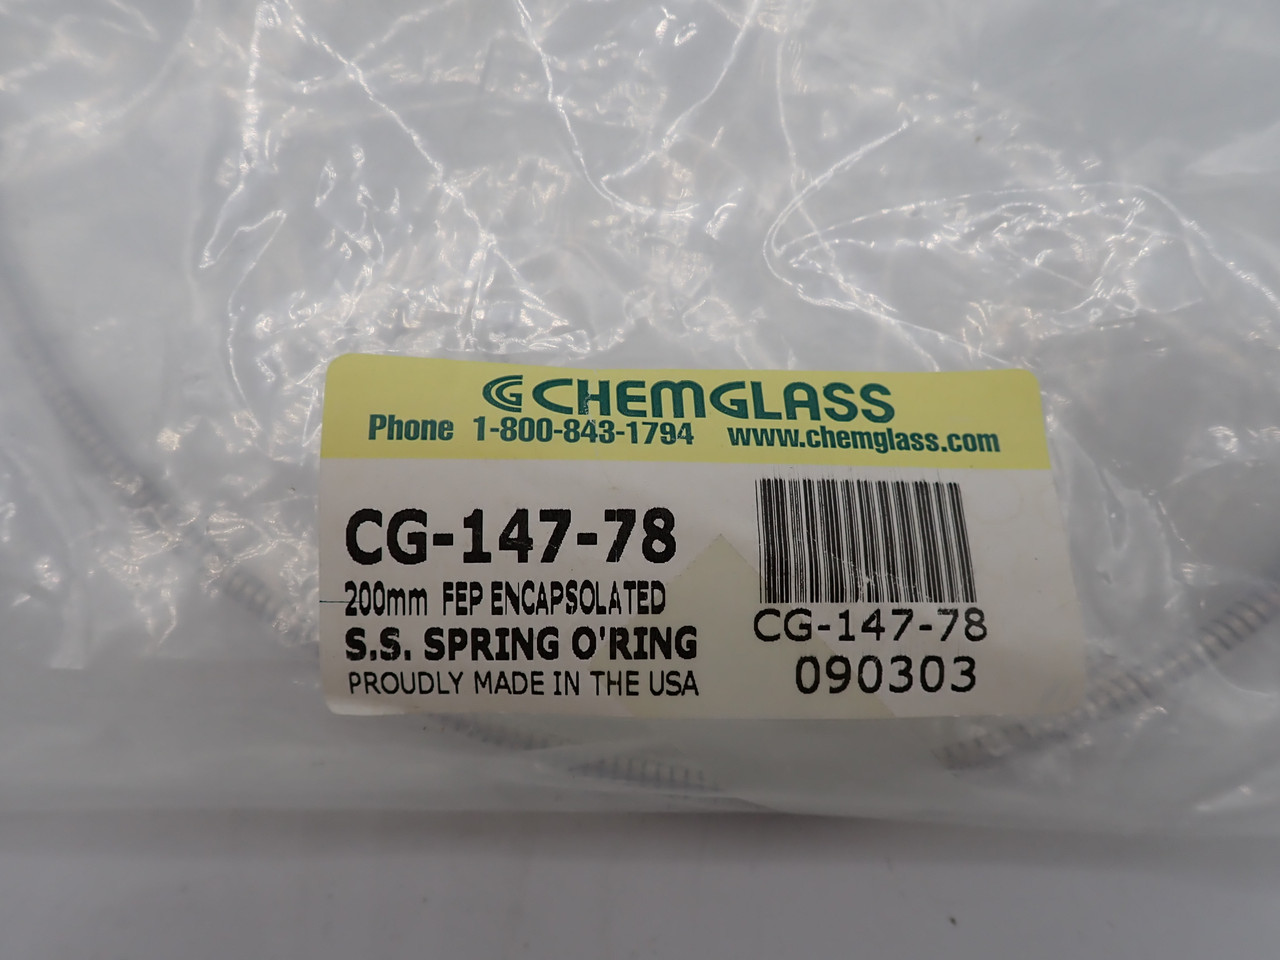 Chemglass CG-147-78 200mm Fep Encapsulated S.S. Spring O'Ring